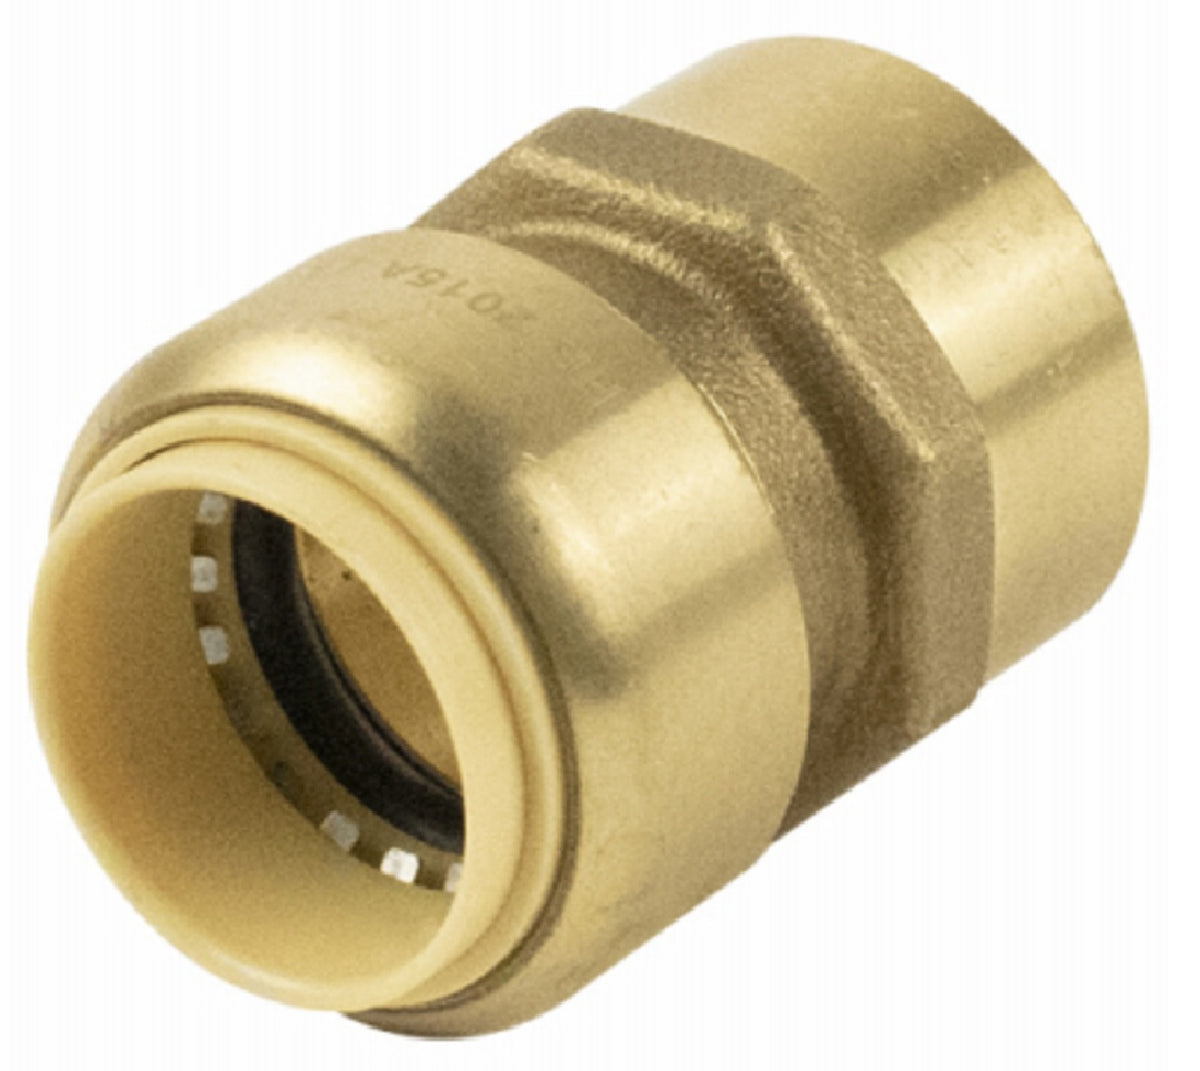 B & K 6630-203 Brass Female Push Adapter, 1/2 Inch